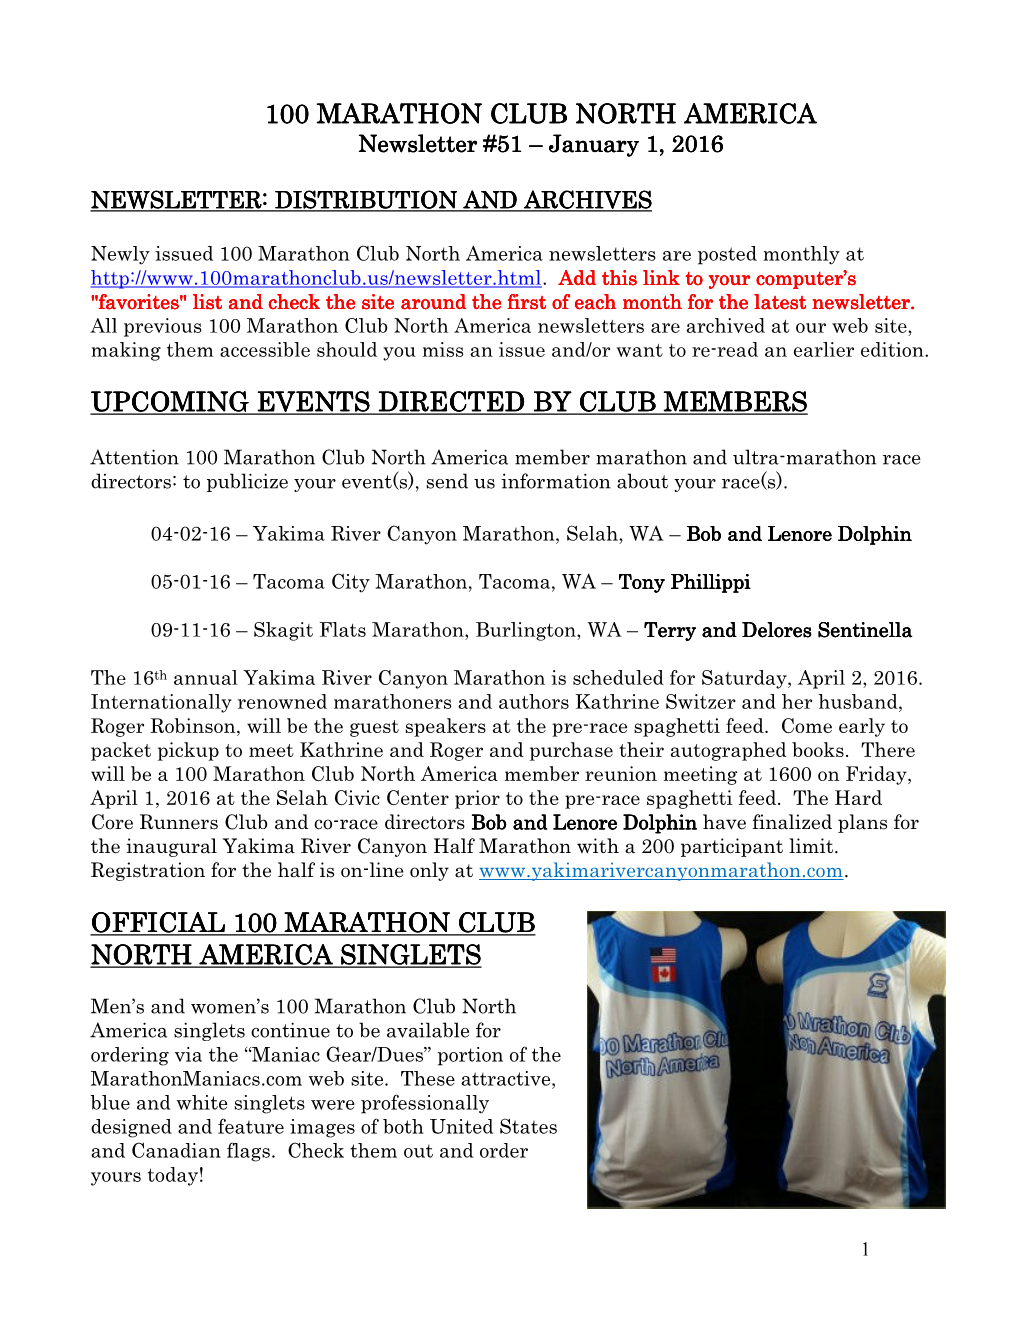 100 Marathon Club North America Newsletter #51 01-01-16